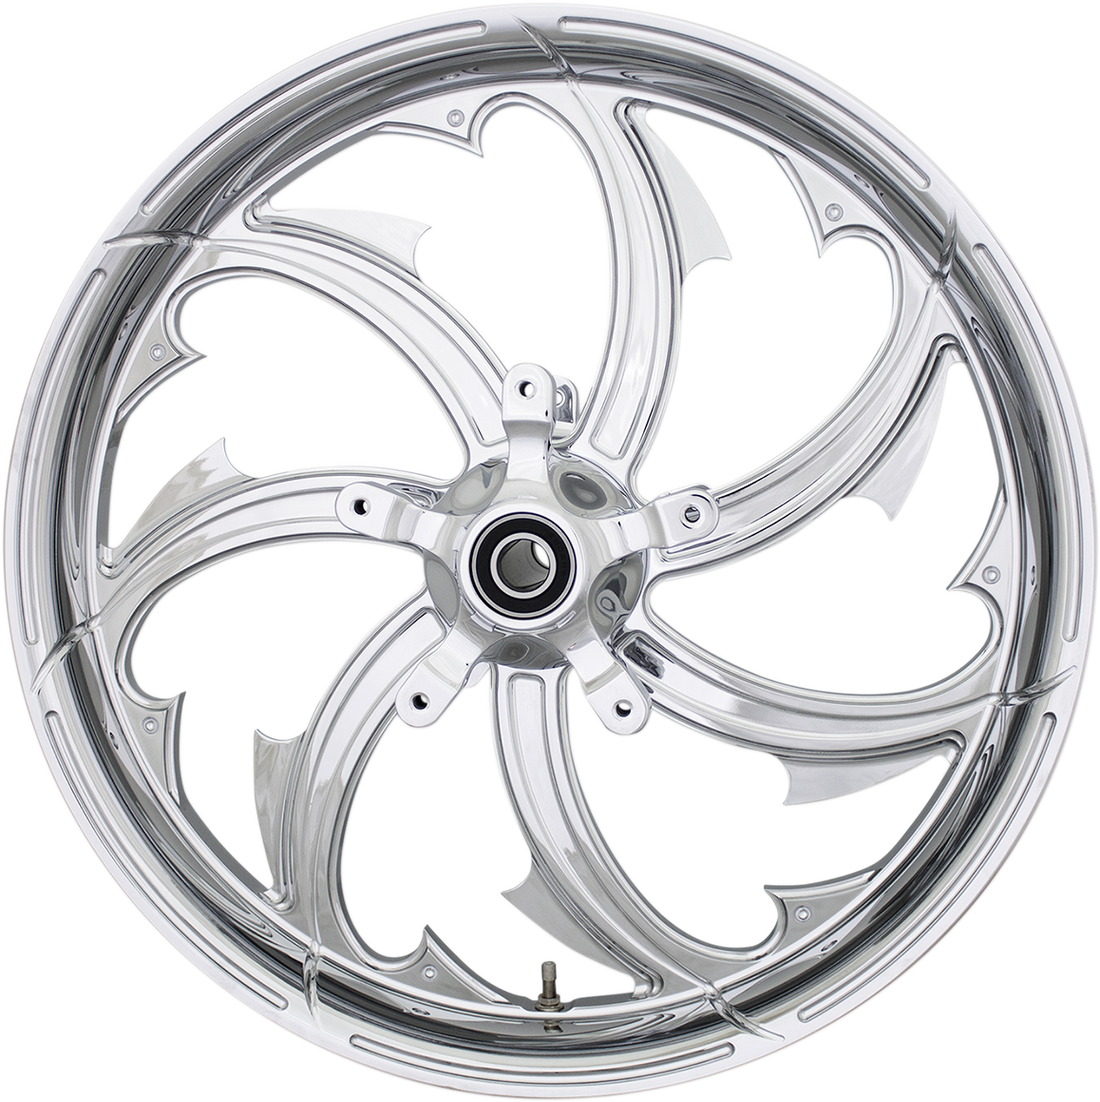 0202-2194 - COASTAL MOTO Rear Wheel - Fury - Single Disc/ABS - Chrome - 18"x5.50" - FL FRY-185-CH-ABST